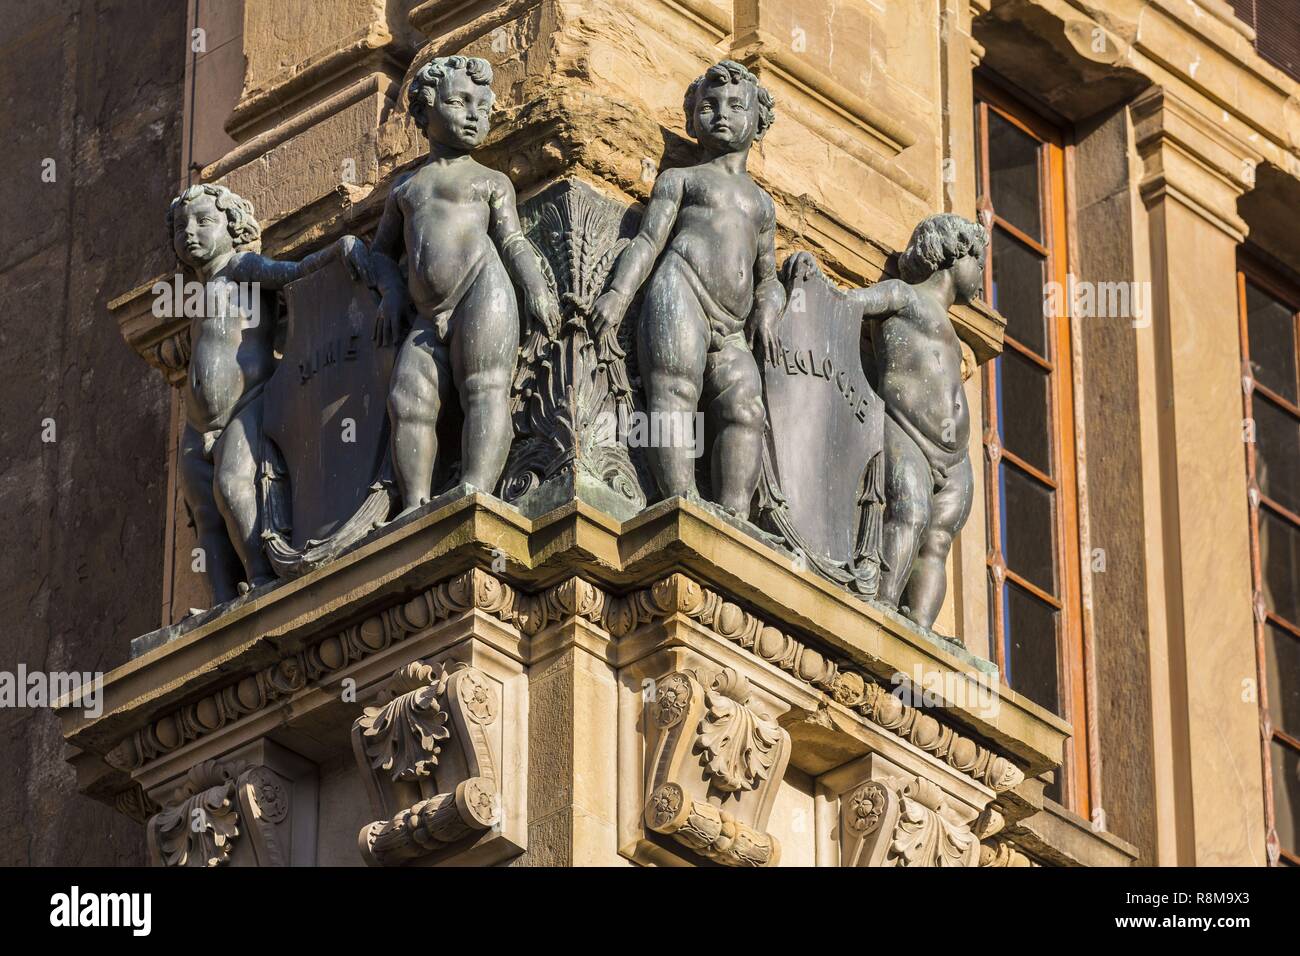 Italien, Toskana, Florenz, die historische Altstadt zum Weltkulturerbe der UNESCO, Skulptur an der Fassade der Capella dei Pazzi Stockfoto